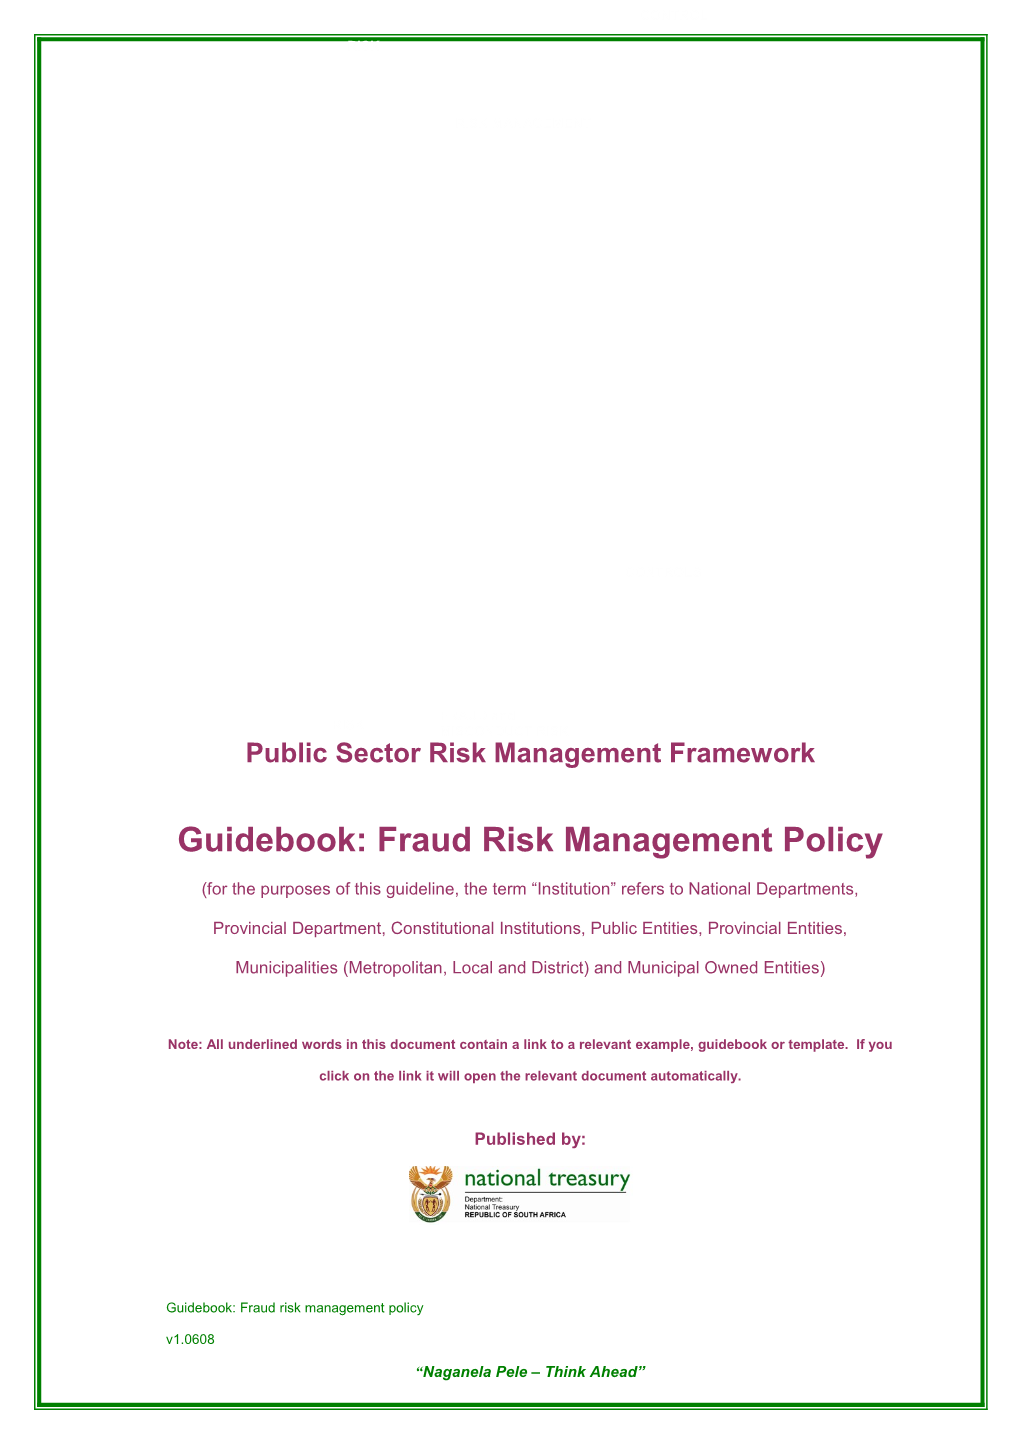 Enterprise Risk Management Framework s1